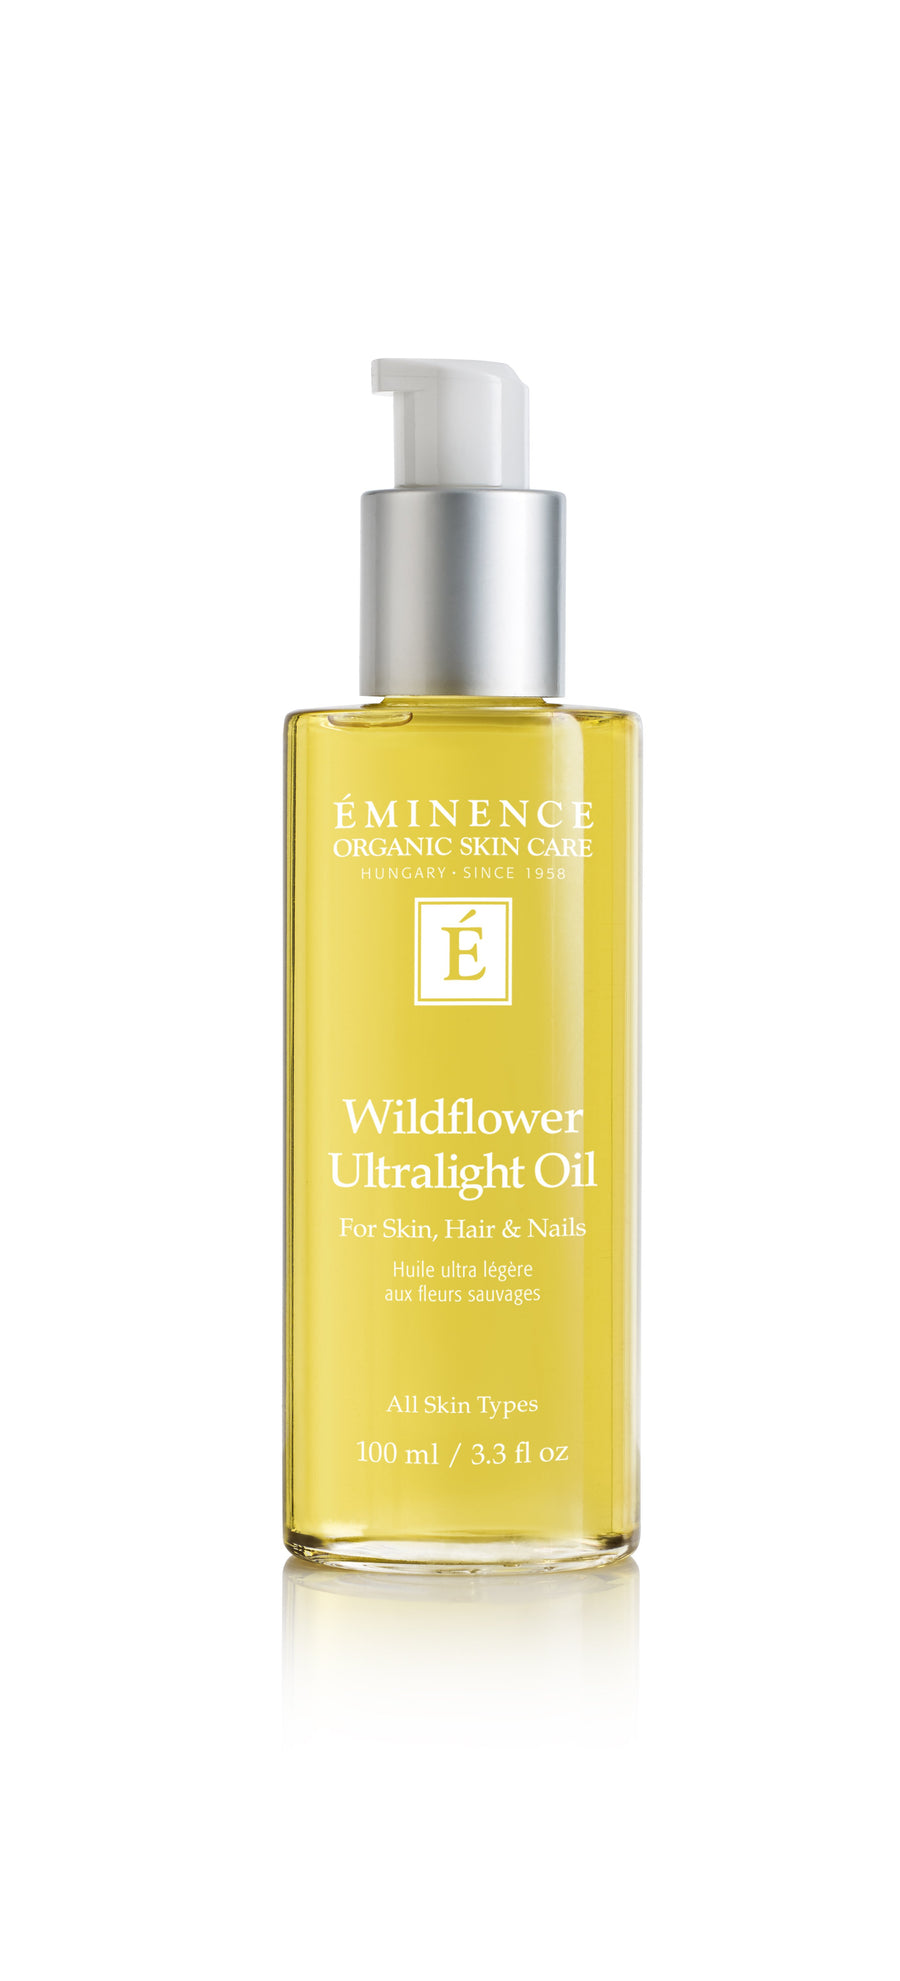 Eminence Organics Wildflower Ultralight Oil